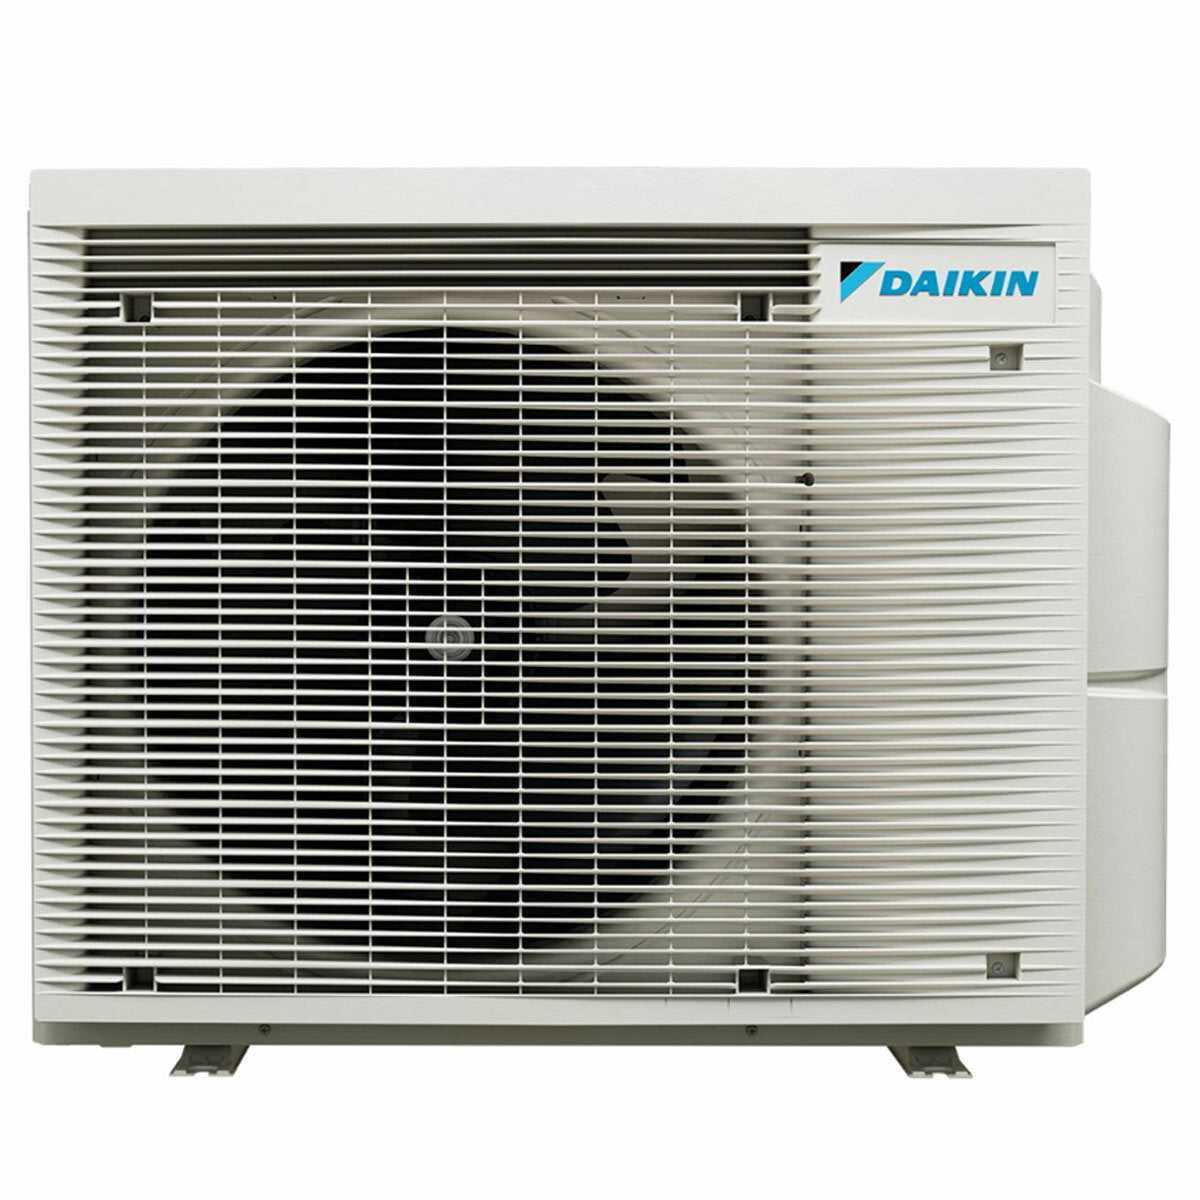 Daikin Mini Sky FDXM-F9 ducted air conditioner quadri split 9000+9000+9000+9000 BTU inverter A++ external 6.8 kW